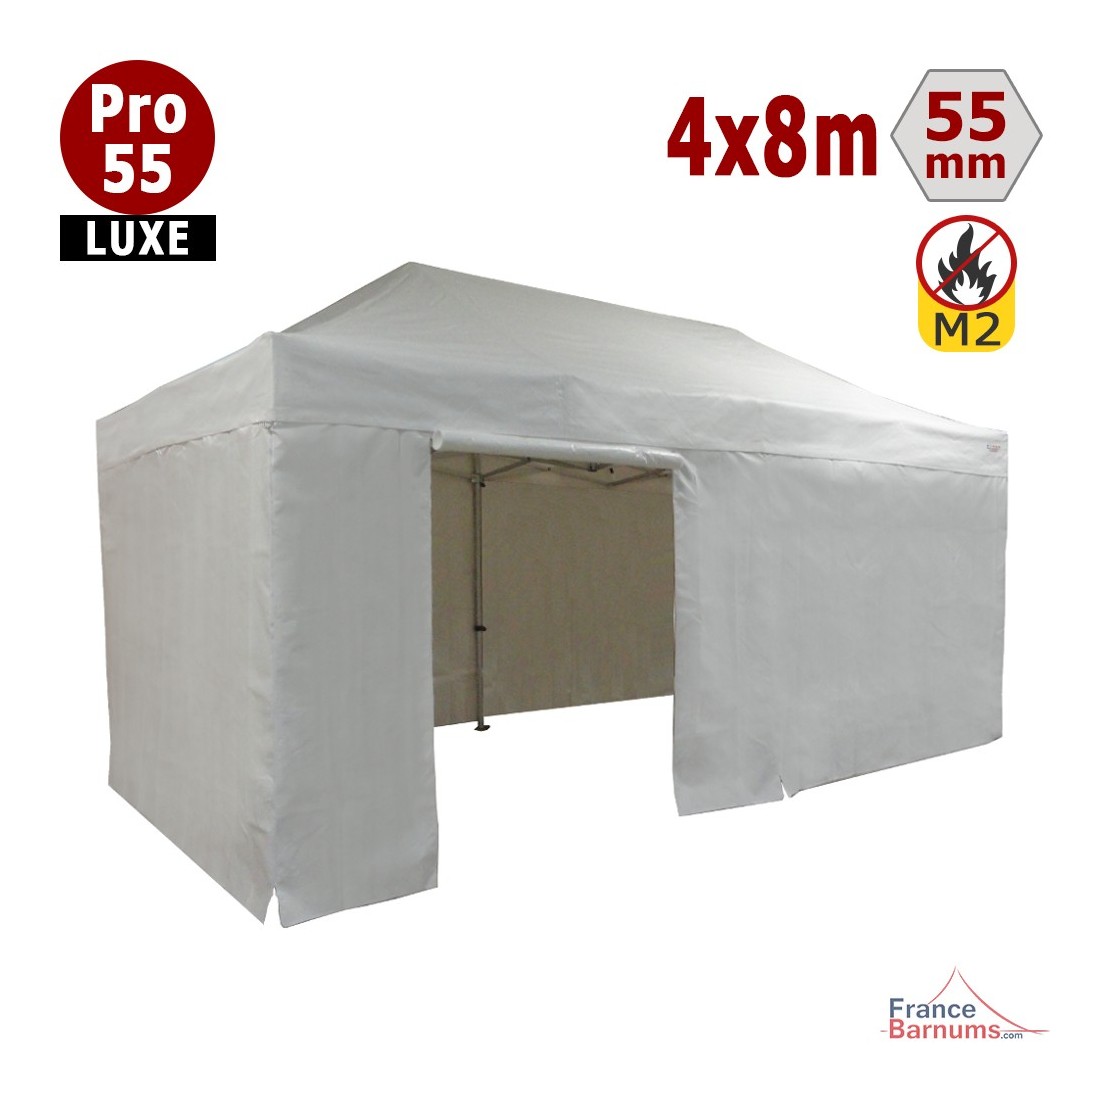 Tente pliante 4x8m Alu Pro 55 LUXE (Blanc) avec Côtés - REF 260